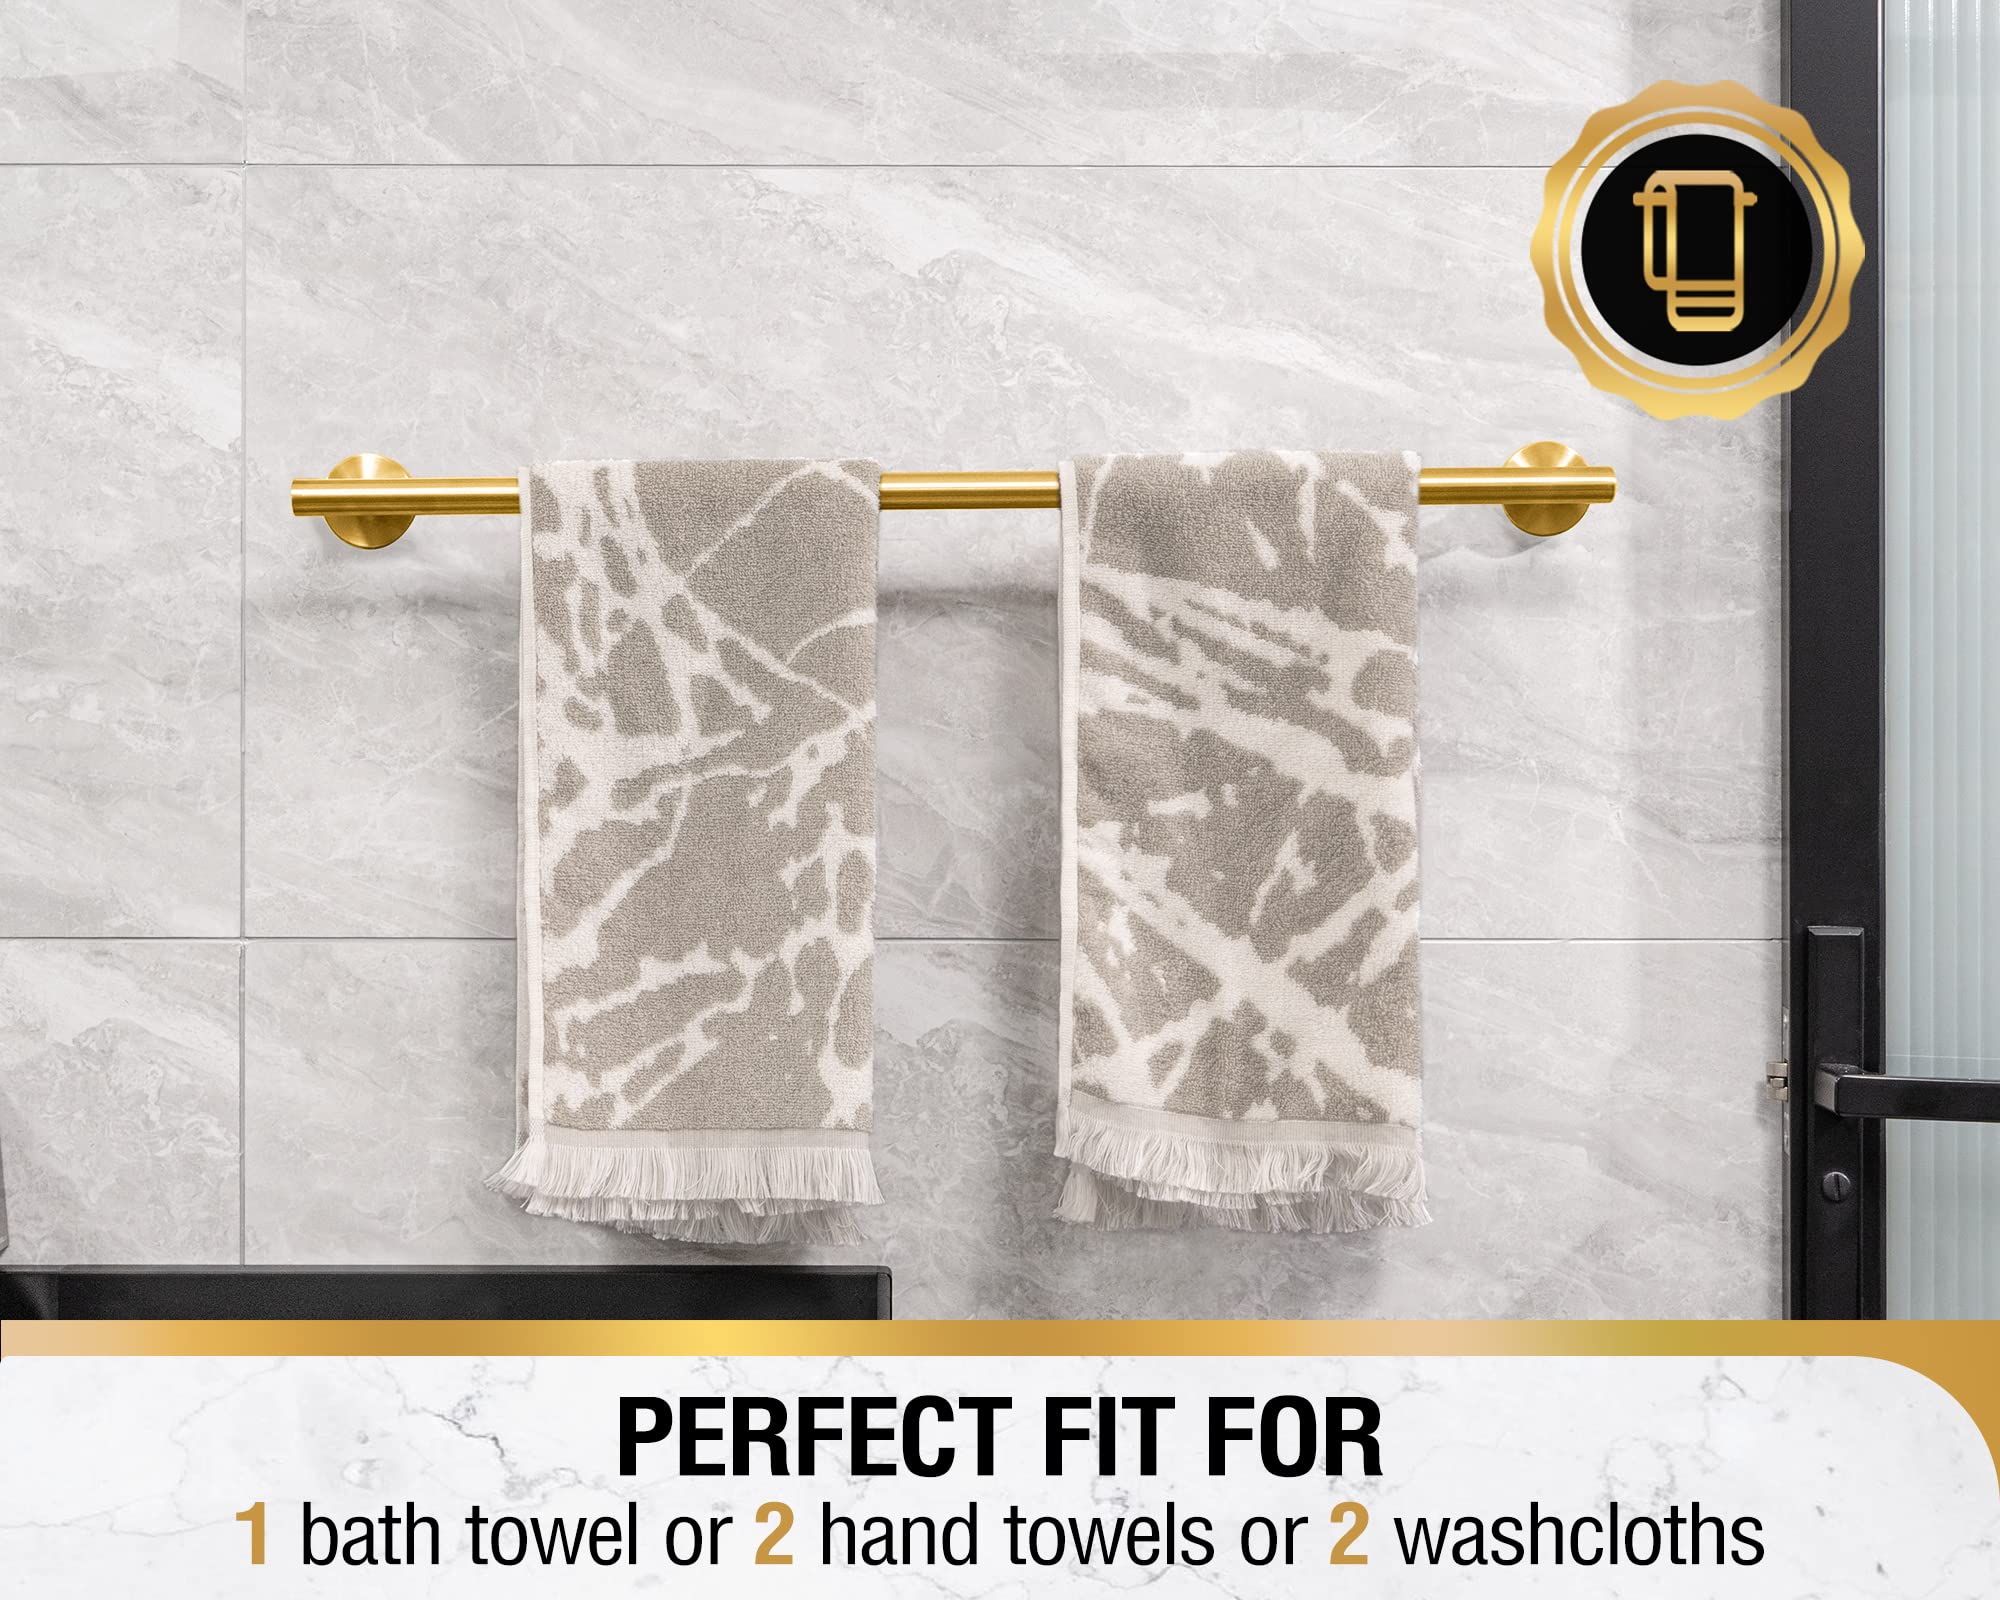 tower rack wall mounted towel bar bathroom stainless steel bath towel holder 25.7 inch gold